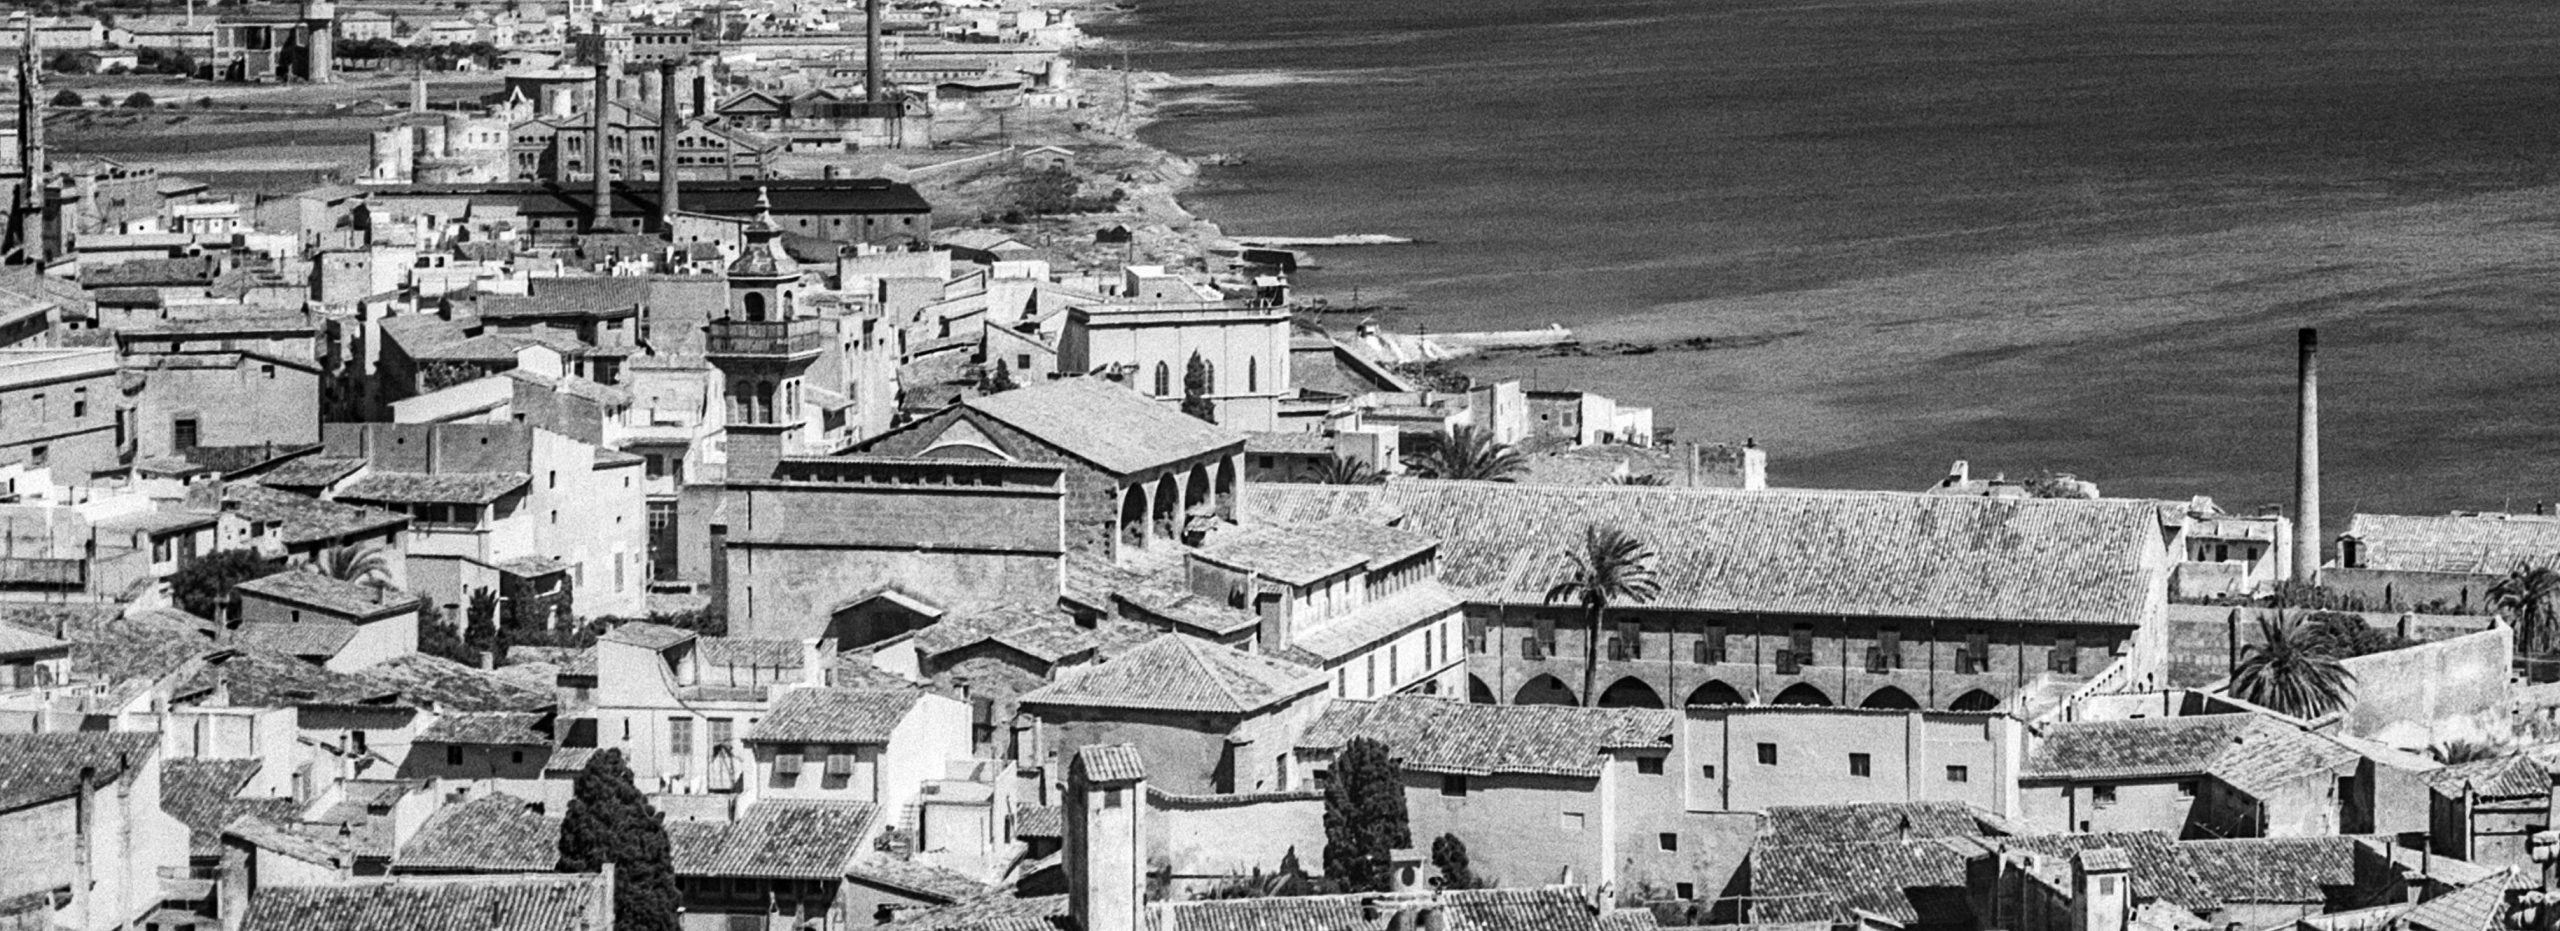 Palma, ciutat conventual